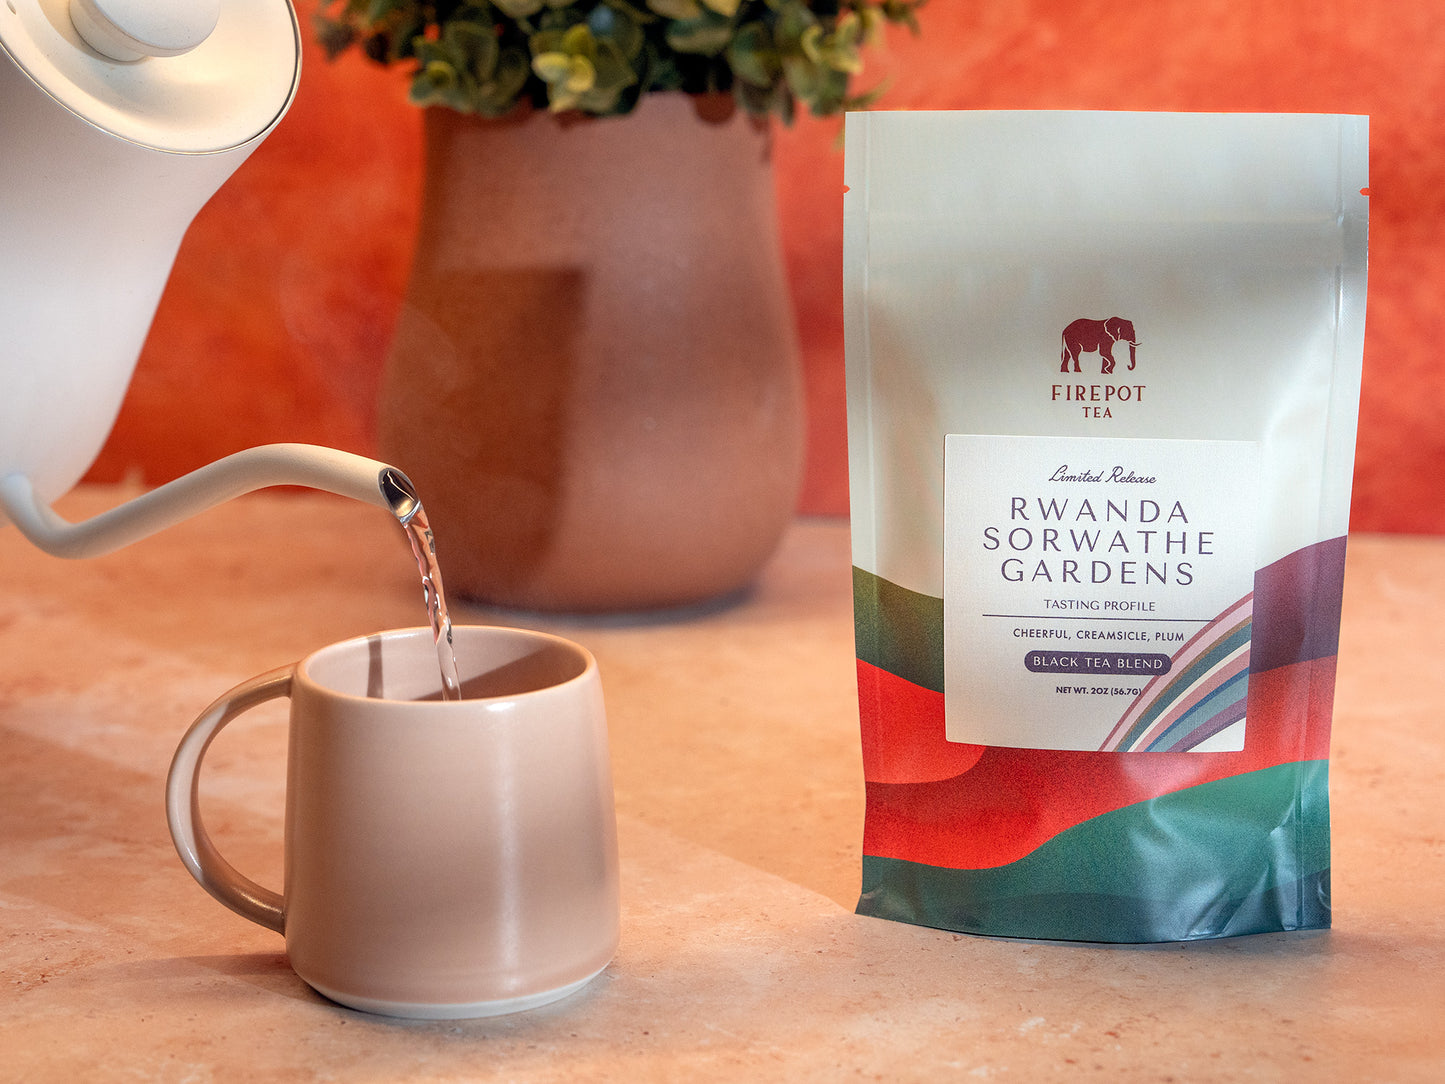 Rwanda Sorwathe Gardens black tea 2 ounce bag with mug and kettle blend